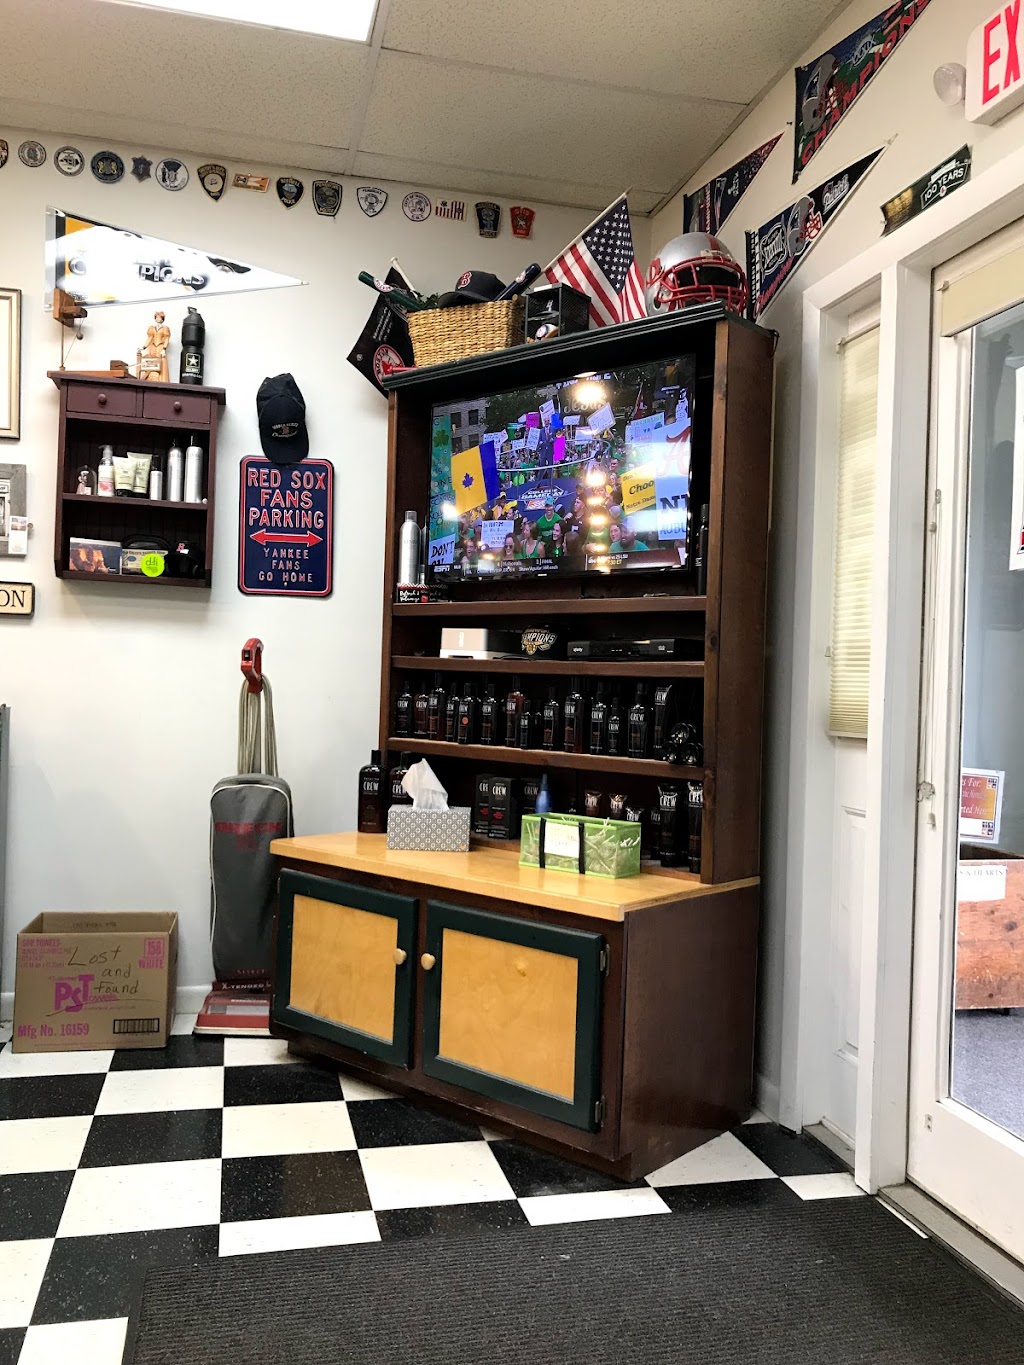 Brians Barber Shop | 179 Summer St, Kingston, MA 02364 | Phone: (781) 585-2727